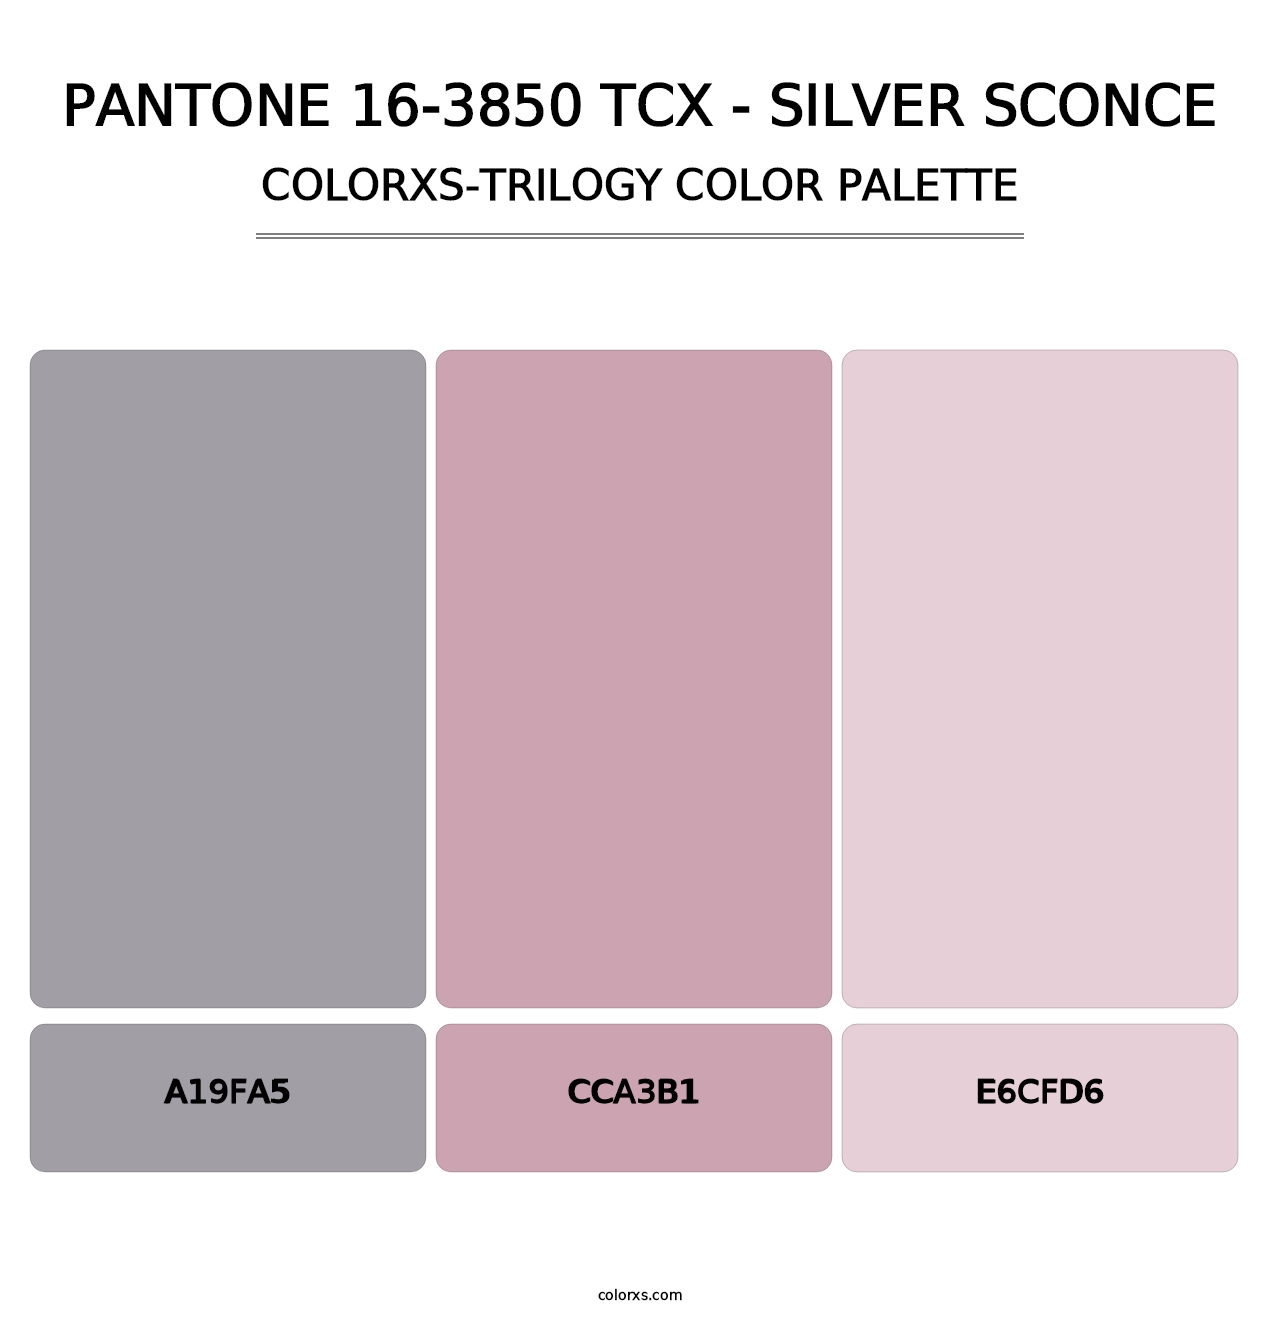 PANTONE 16-3850 TCX - Silver Sconce - Colorxs Trilogy Palette